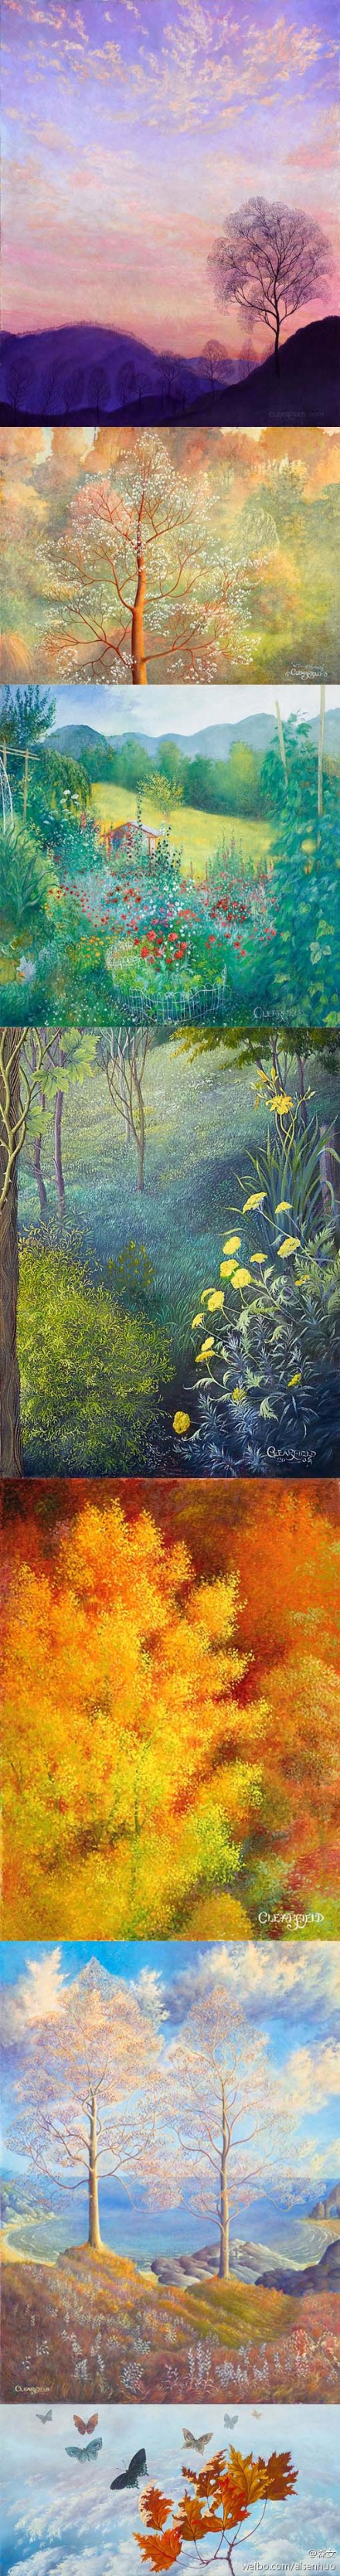 rachel clearfield风景画,他用画笔捕捉到了大自然最美的颜色